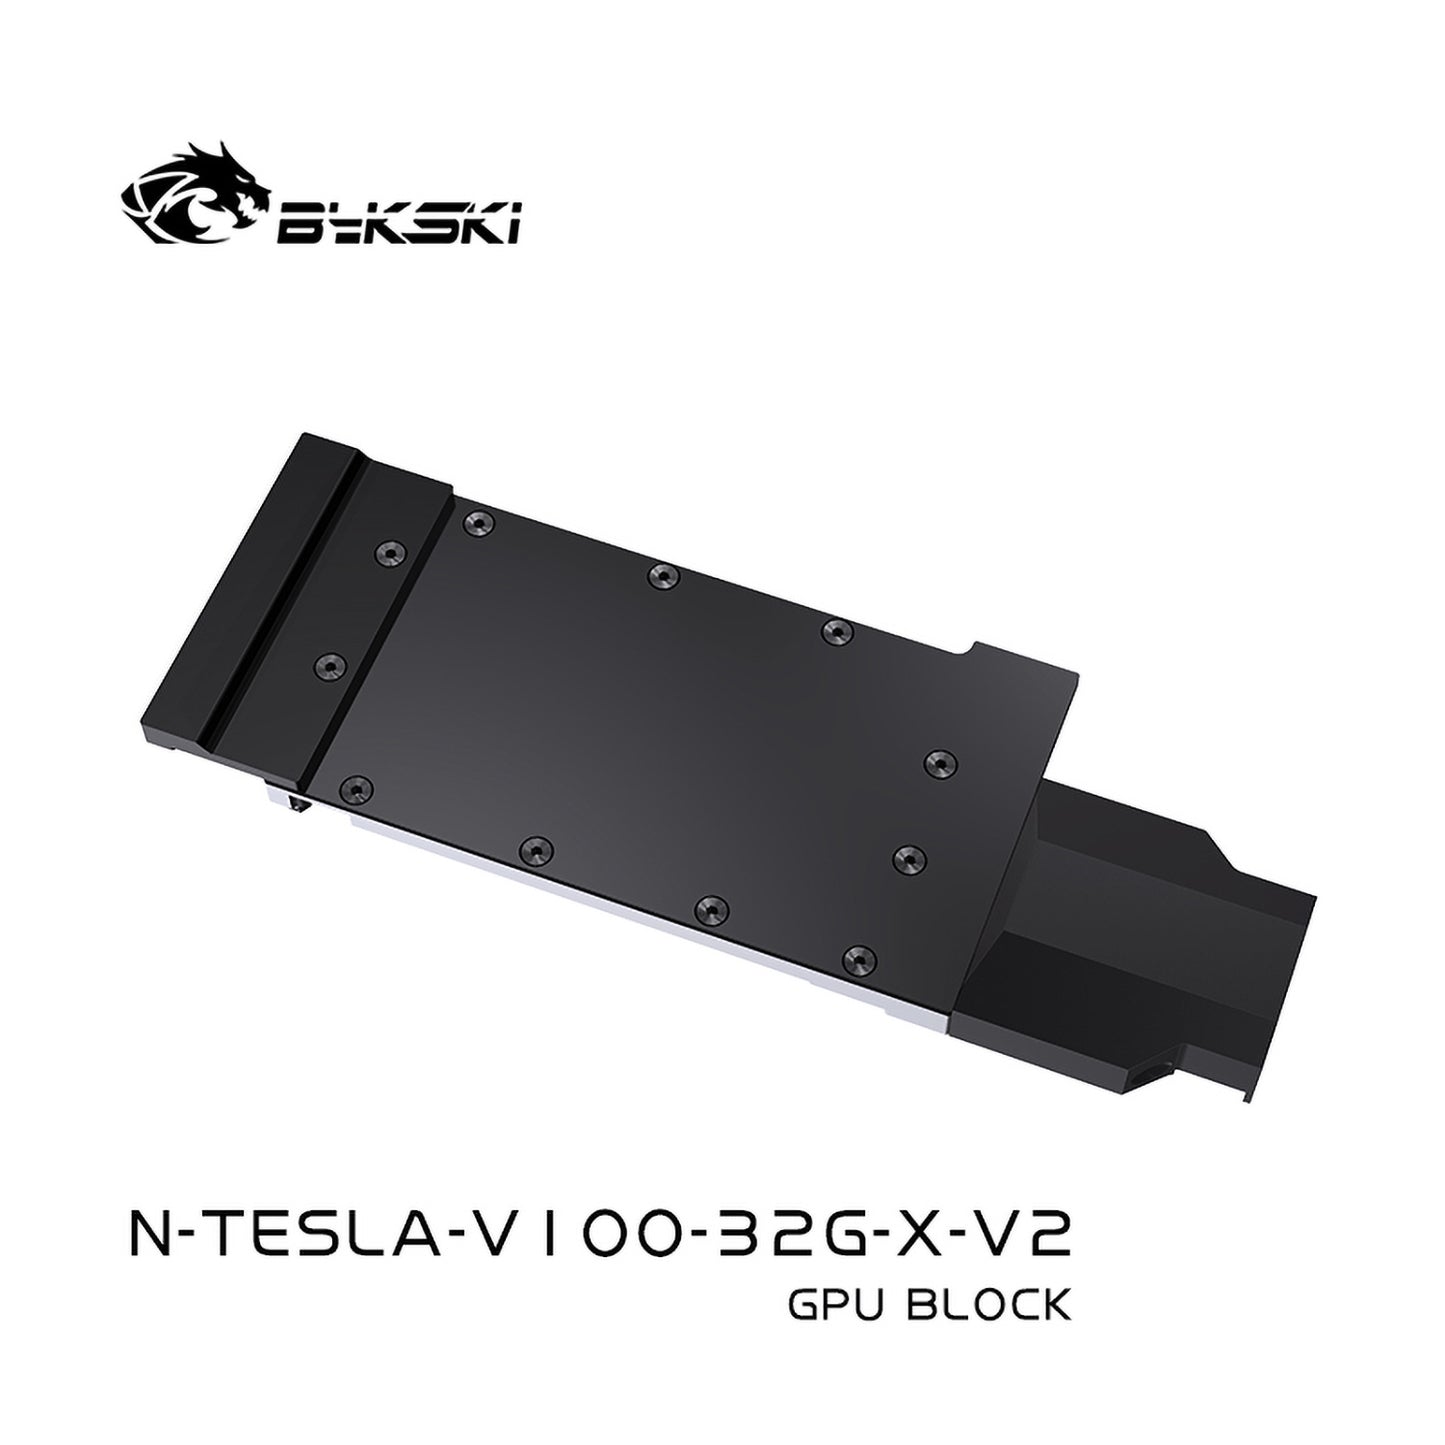 Bykski GPU Block For Nvidia Tesla V100 32GB FHHL, High Heat Resistance Material POM + Full Metal Construction, With Backplate Full Cover GPU Water Cooling Cooler Radiator Block N-TESLA-V100-32G-X-V2